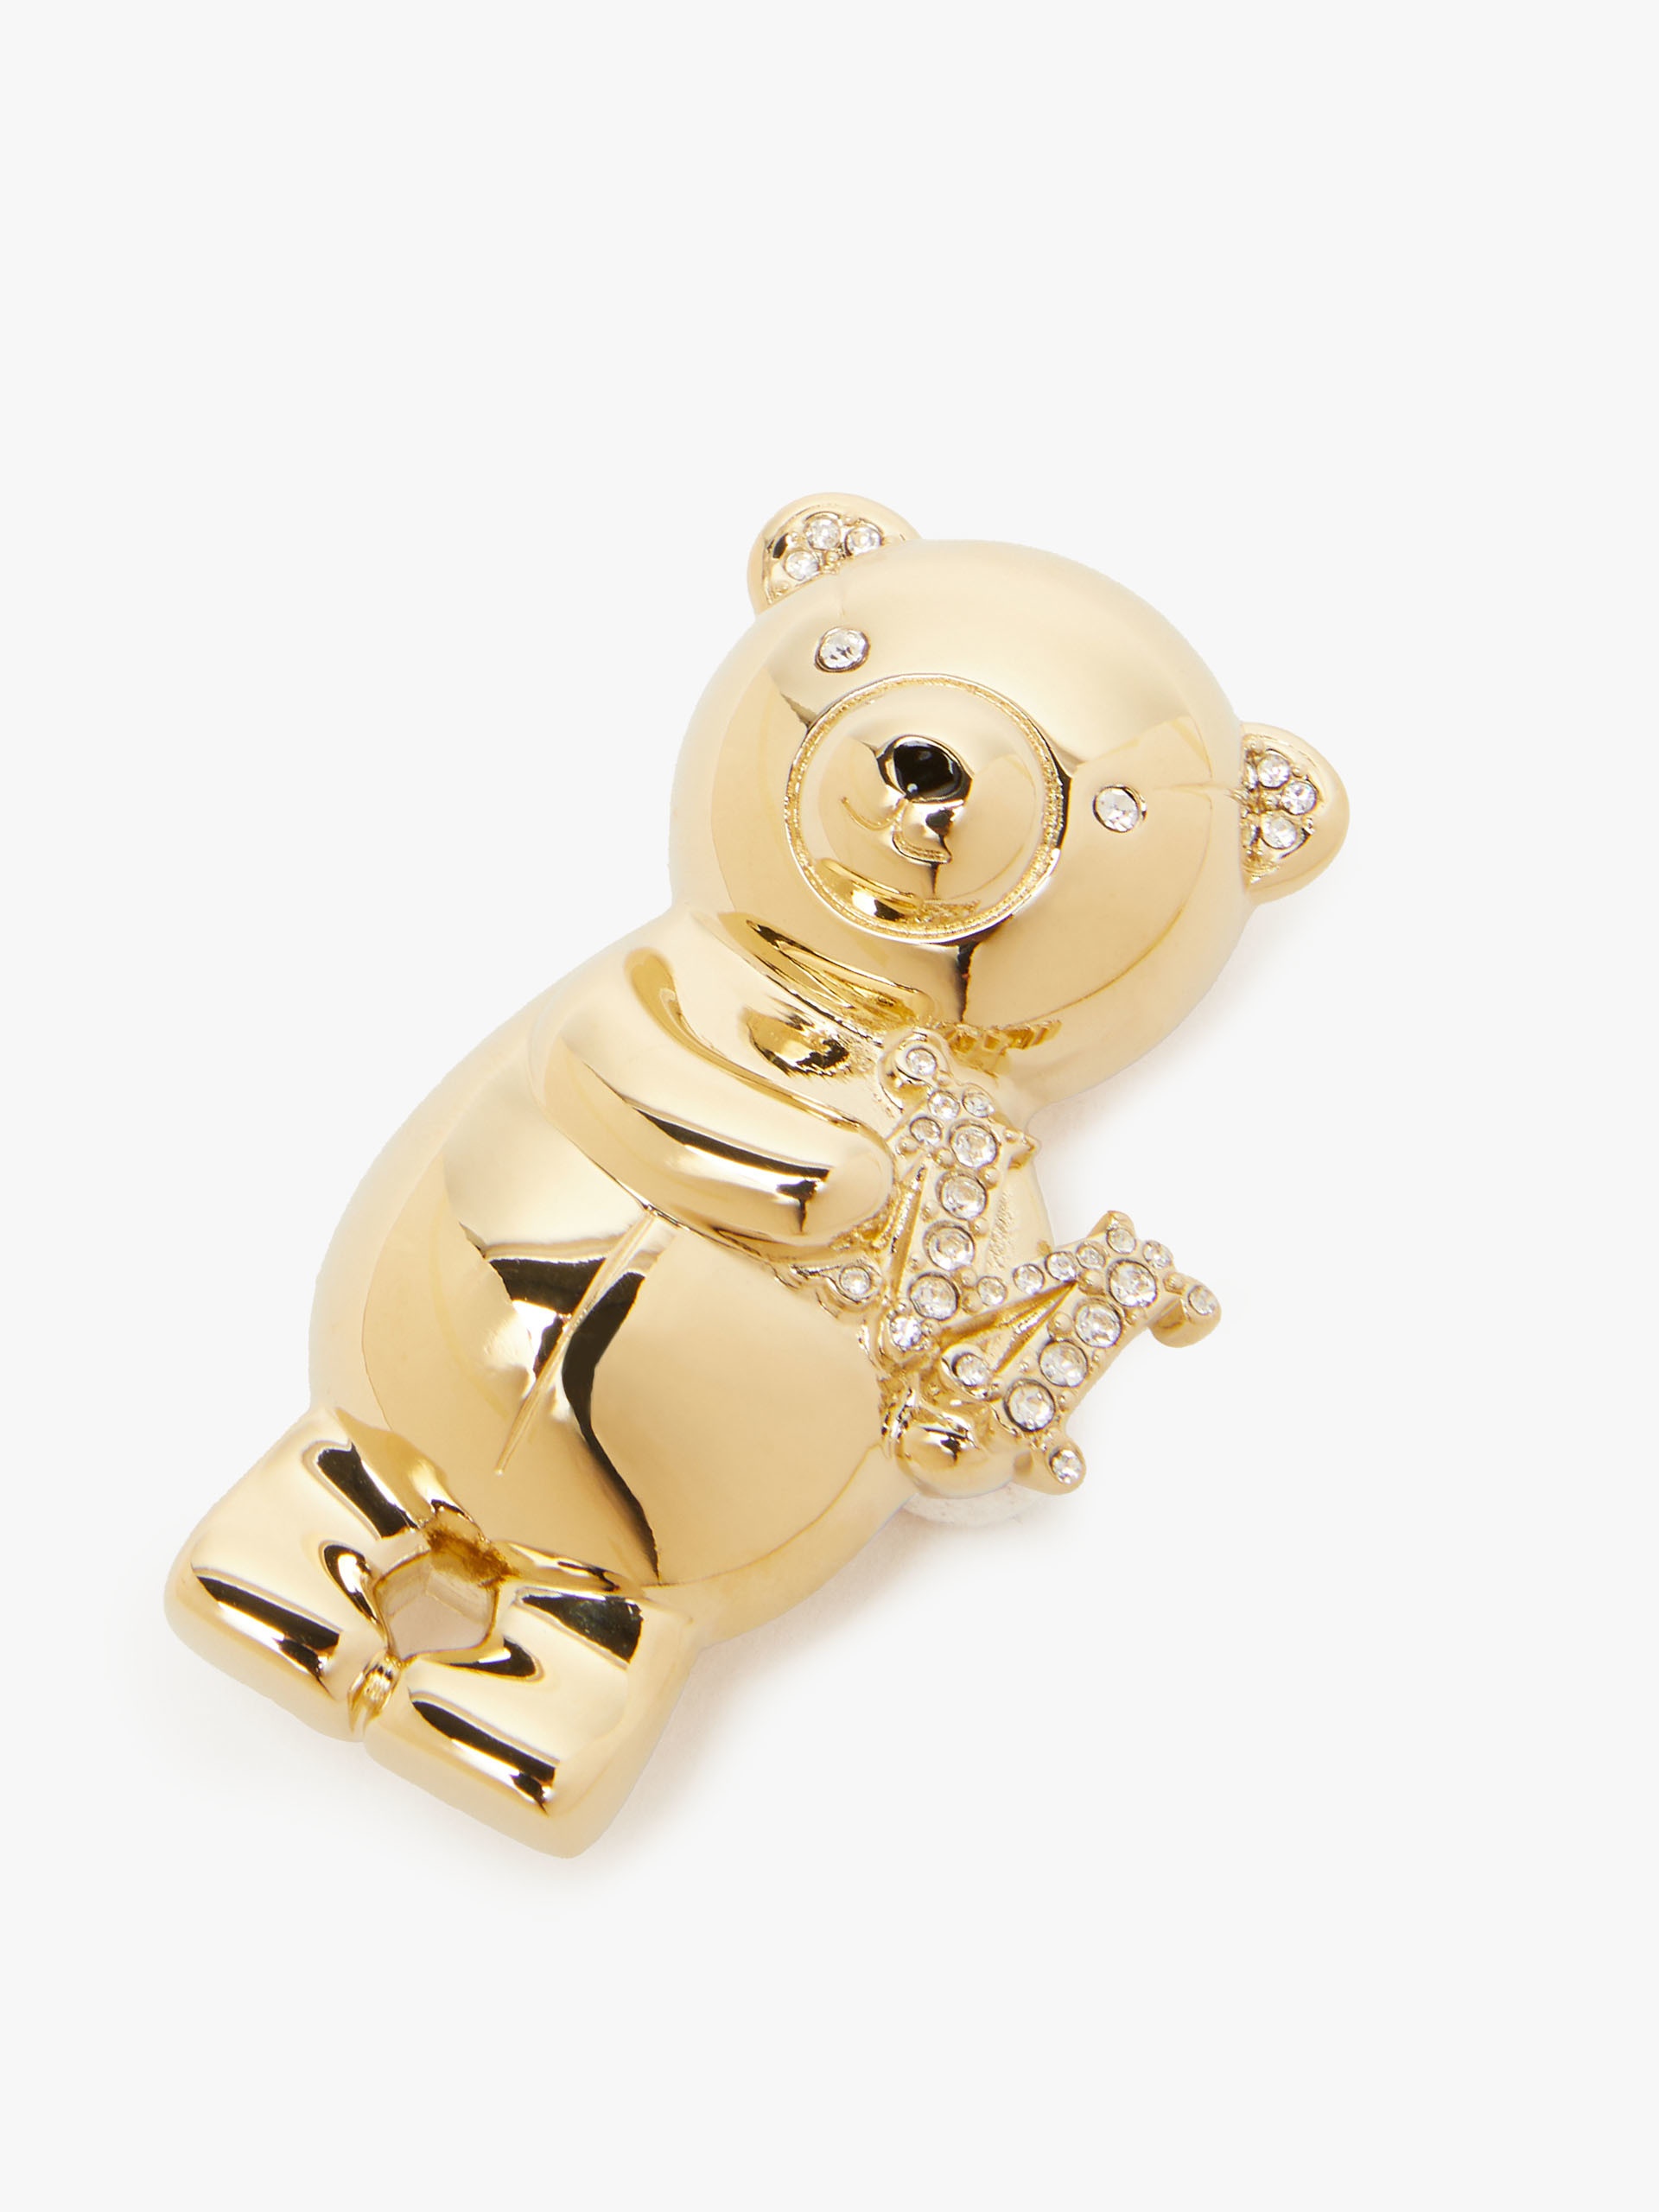 Metal teddy bear brooch - 3